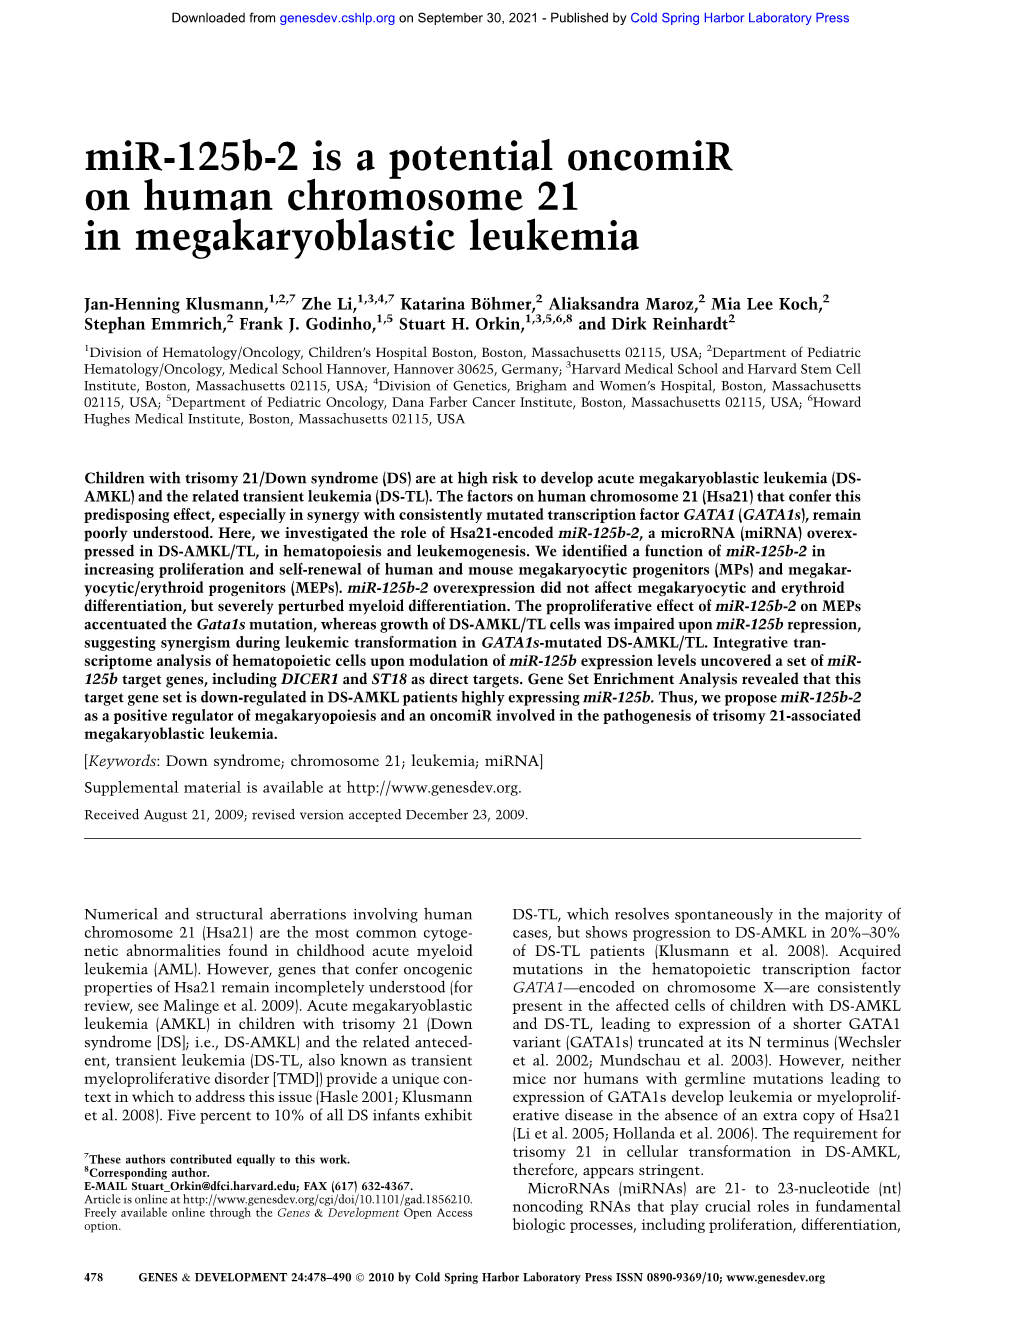 Mir-125B-2 Is a Potential Oncomir on Human Chromosome 21 in Megakaryoblastic Leukemia